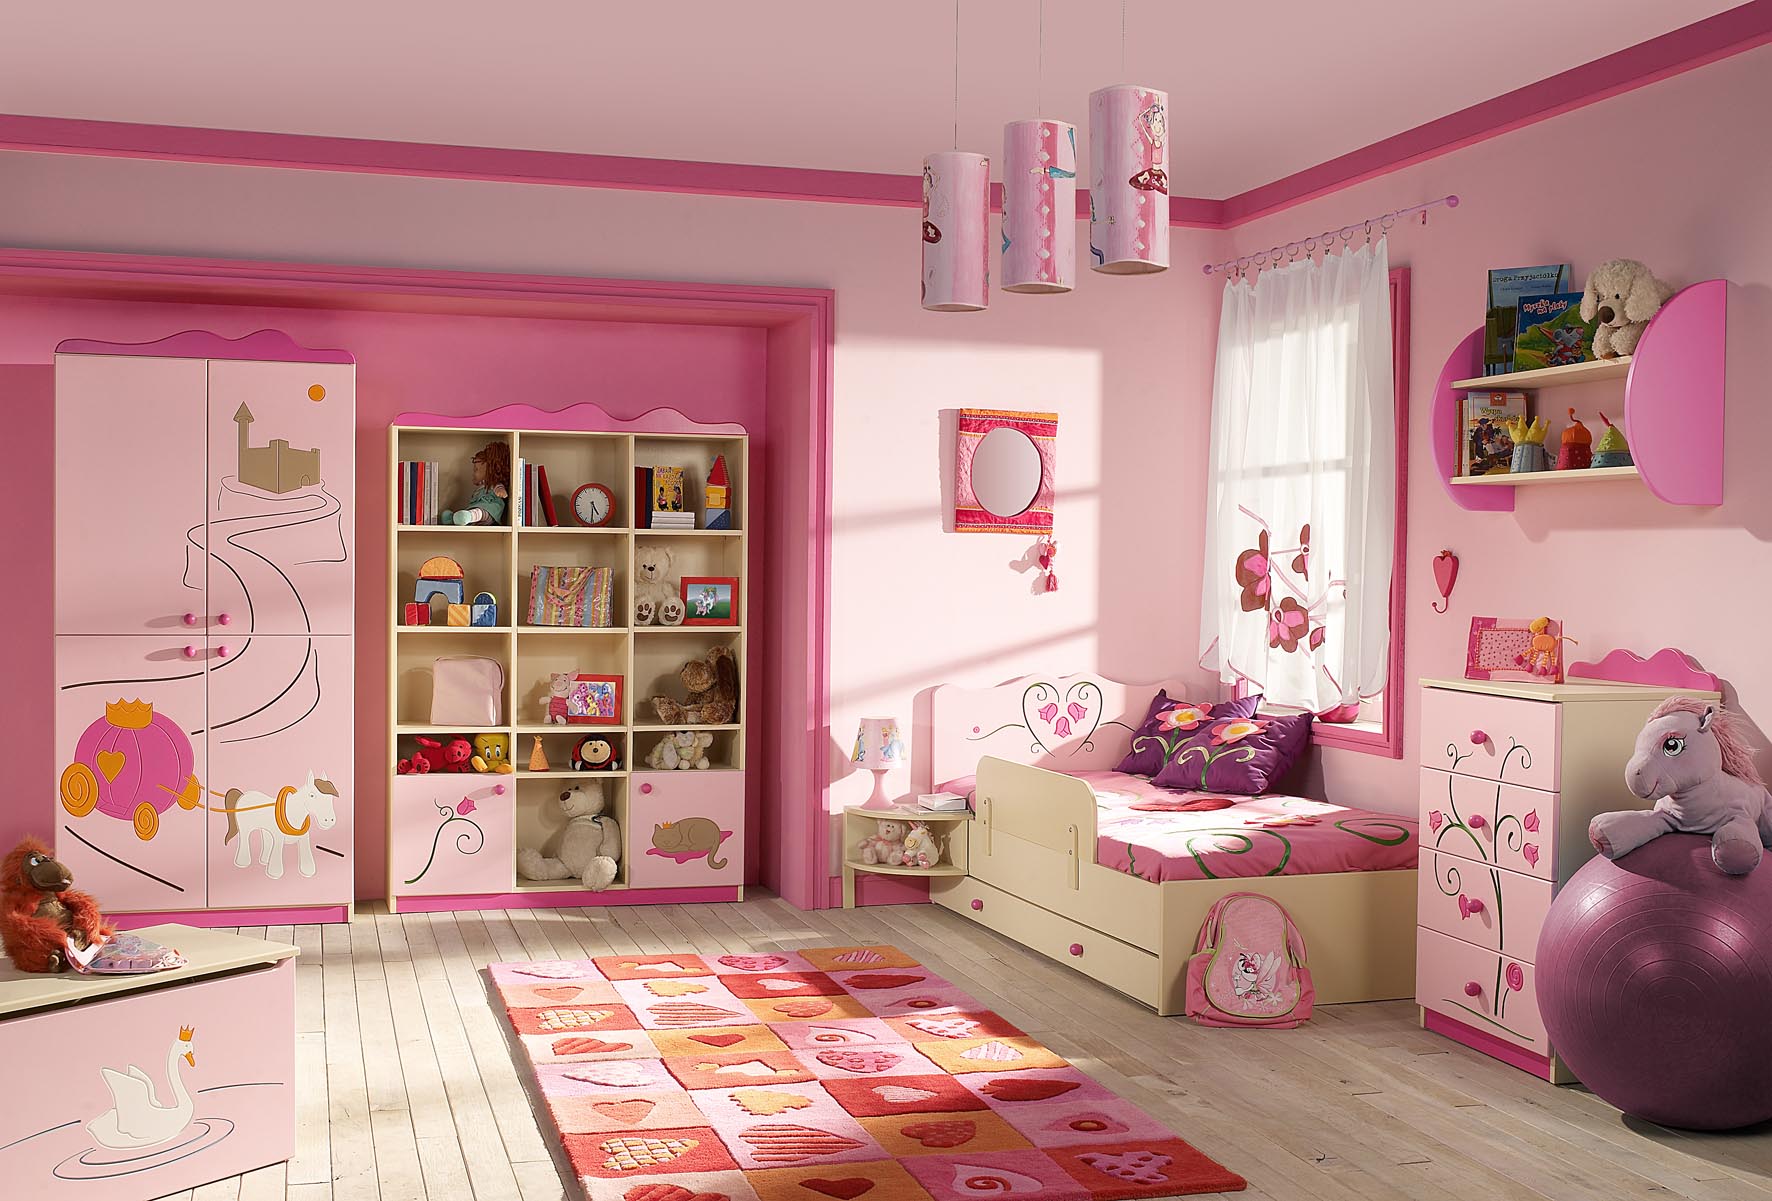 lovable-cool-pink-bedroom-designs-for-girls-on-bedrooms-with-pink-kids-bedroom-furniture-pink-bedroom-ideas-for-teenage-girls